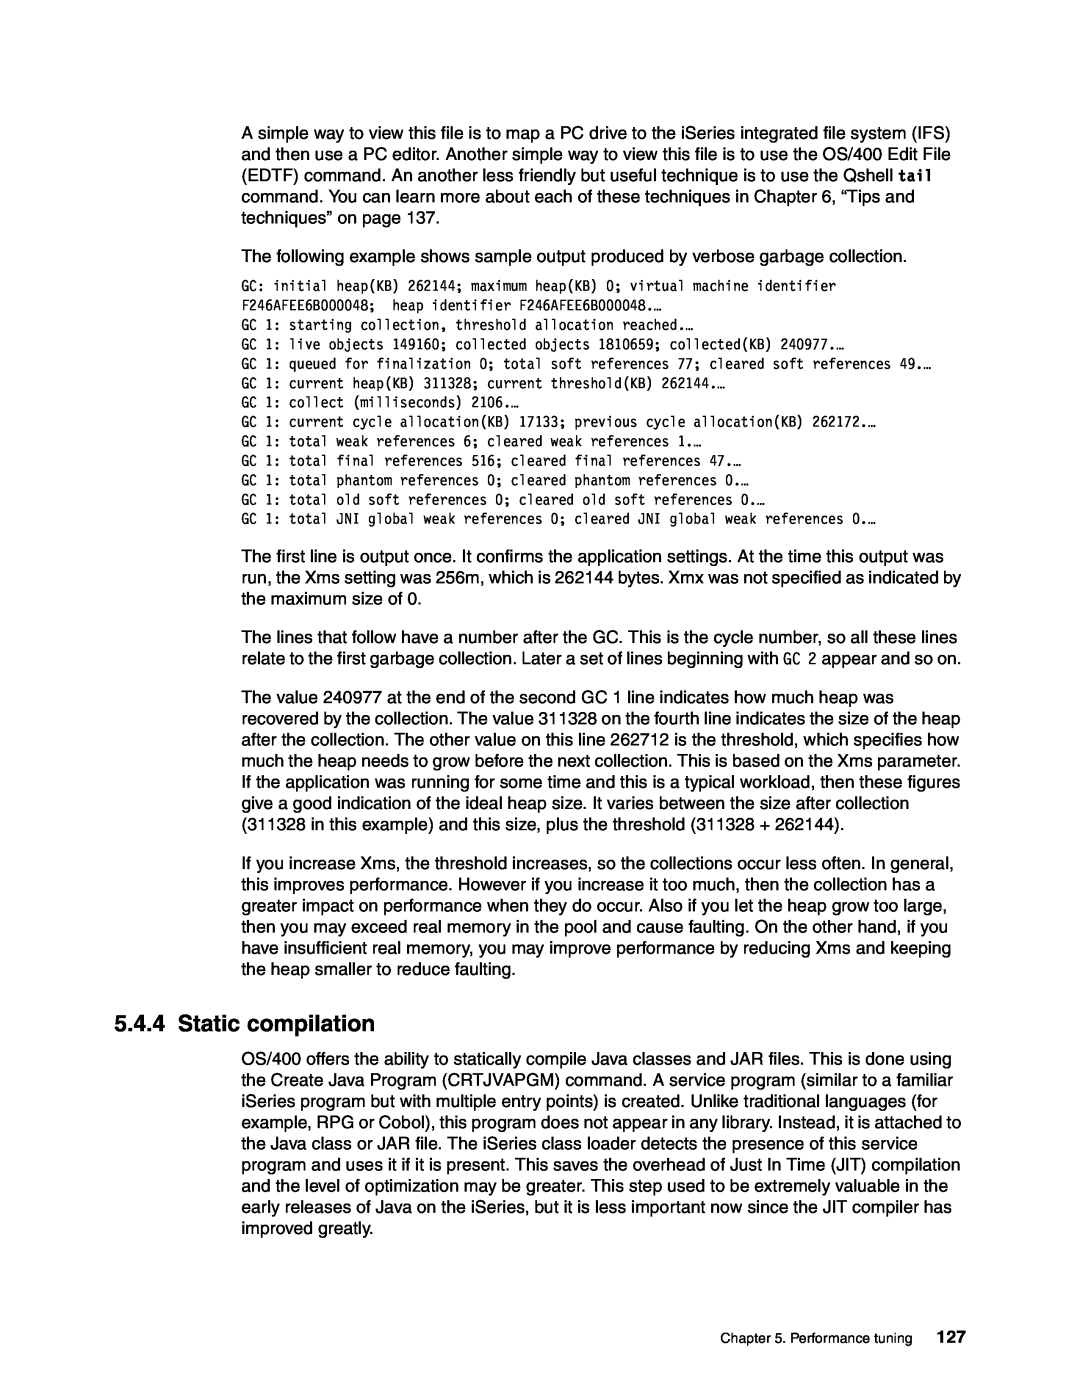 IBM SG24-6526-00 manual Static compilation 